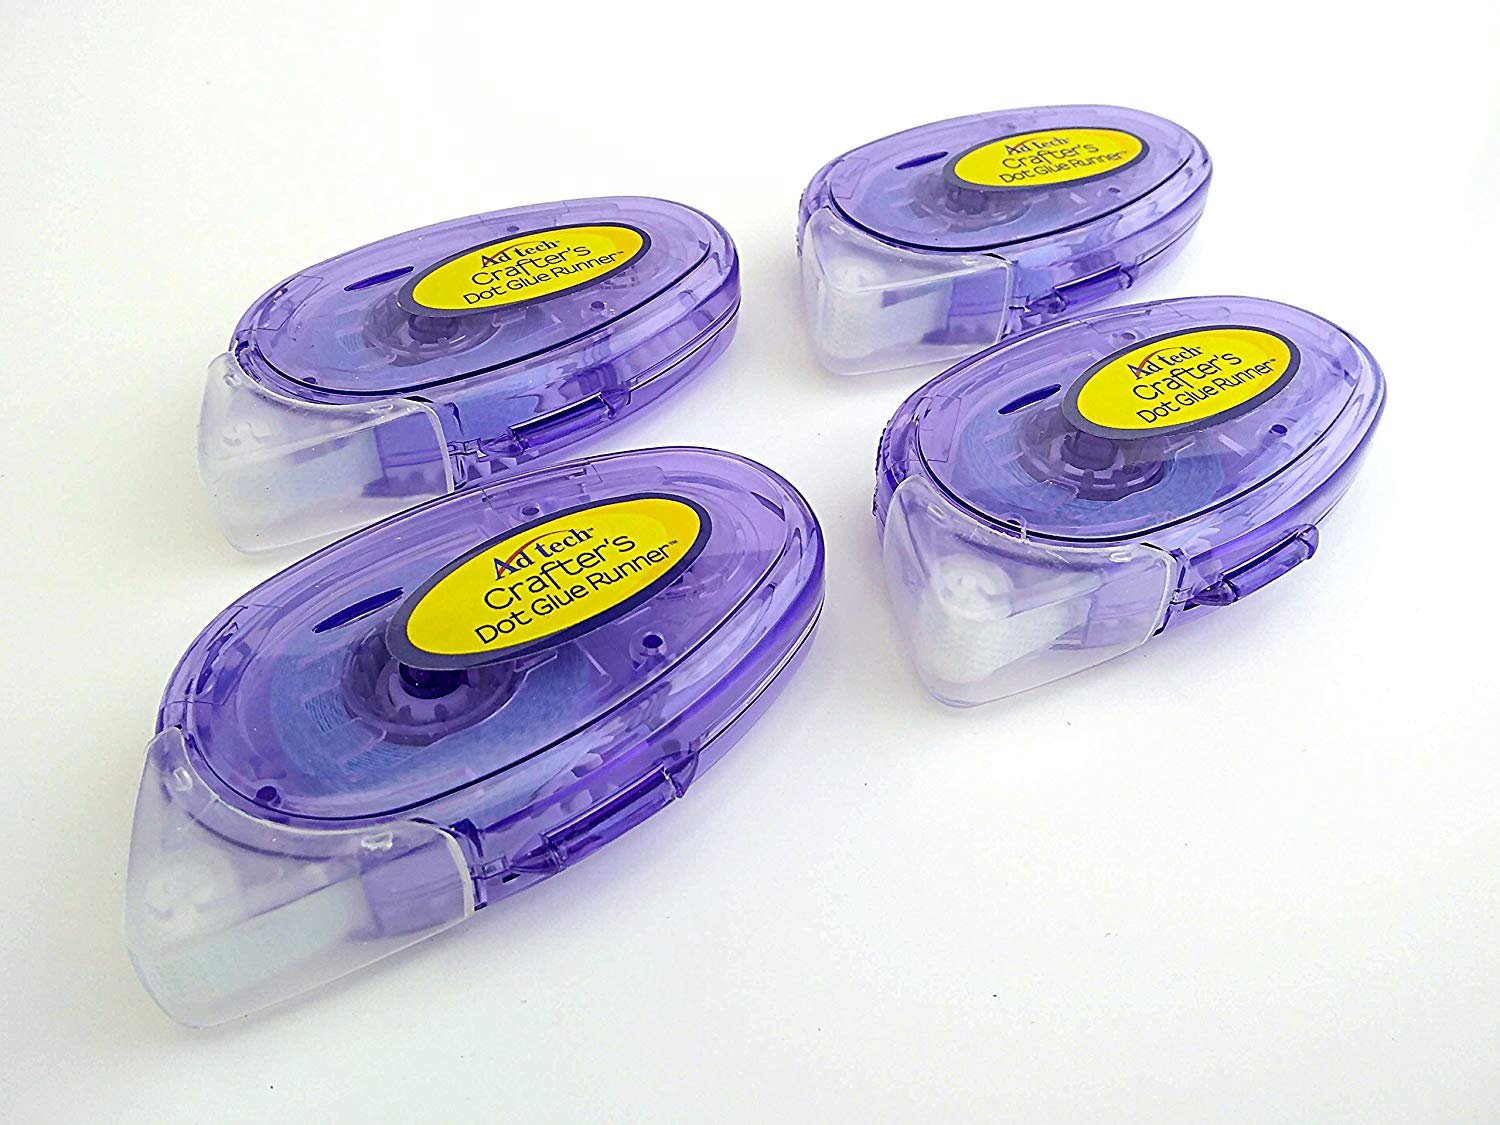 AdTech Micro Dot Glue Runner Adhesive - 8.75 Yards x 0.33 - Clear, 4 Pack